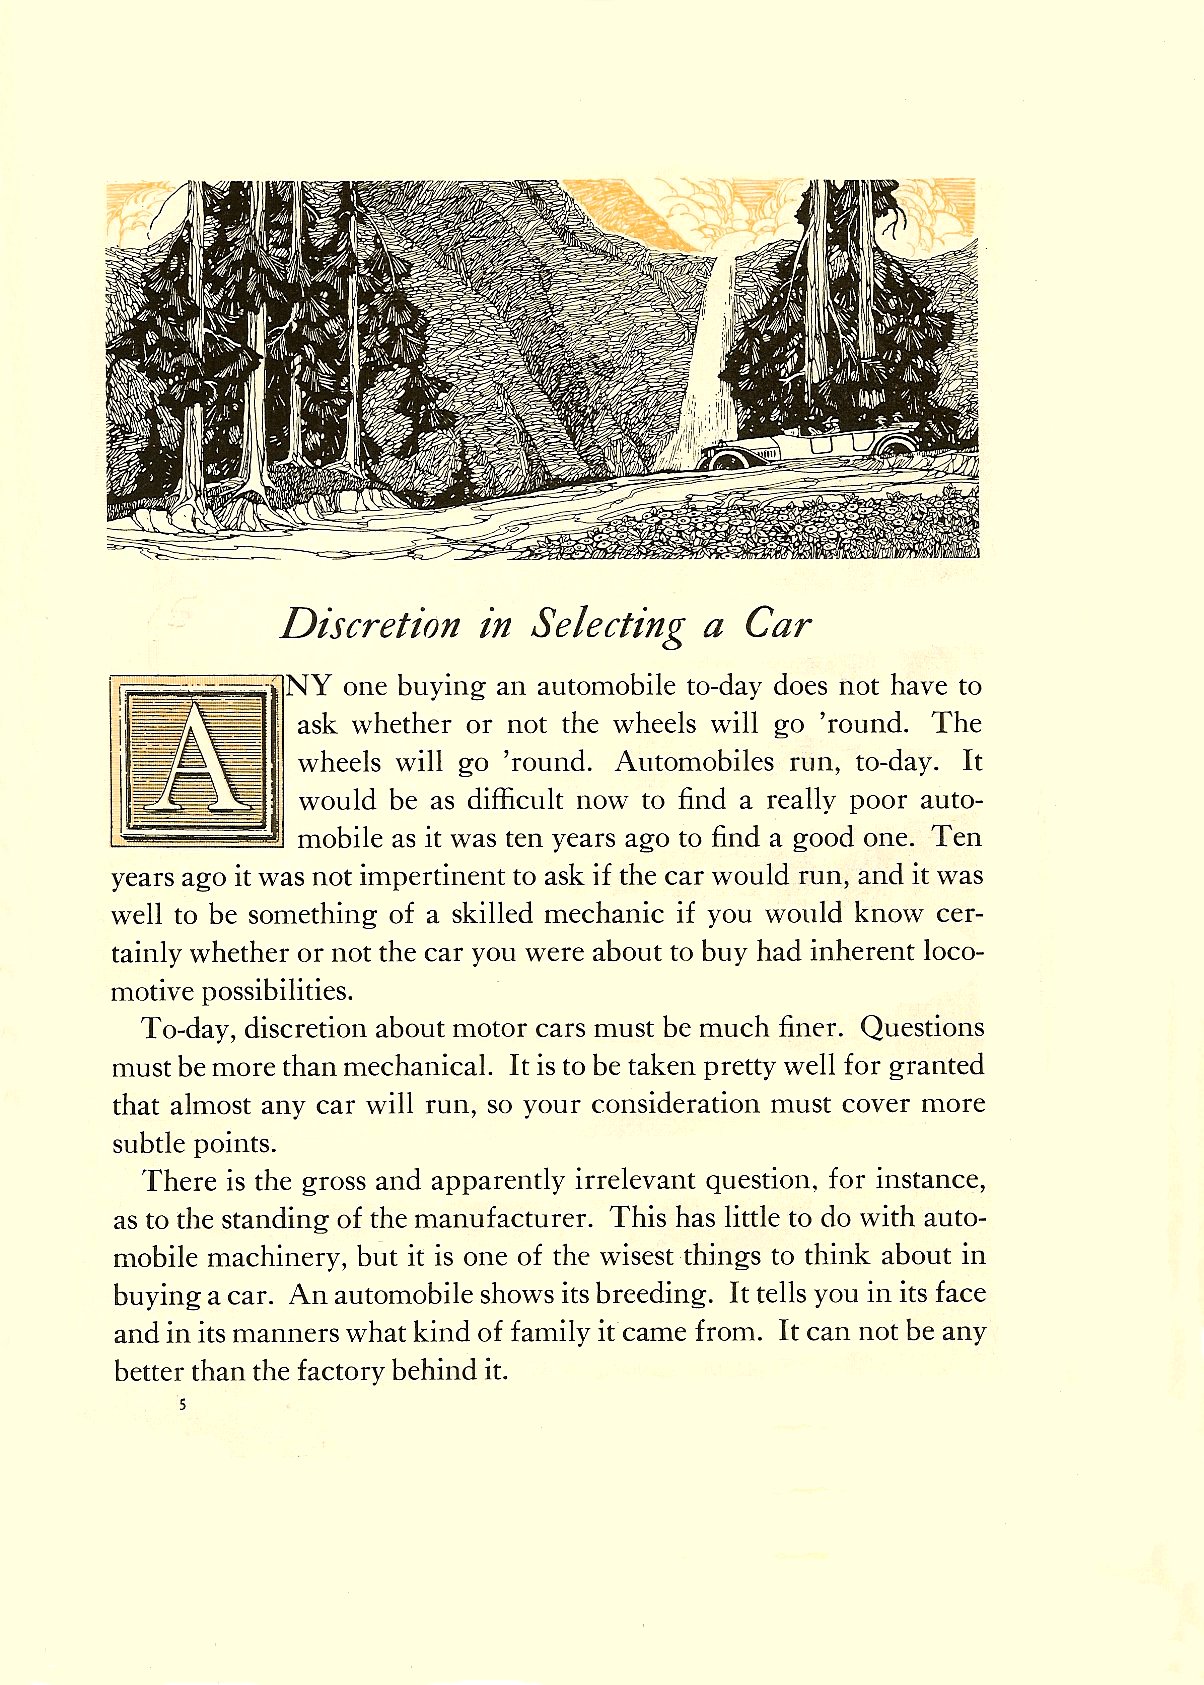 1915_National_Auto_Catalogue-05